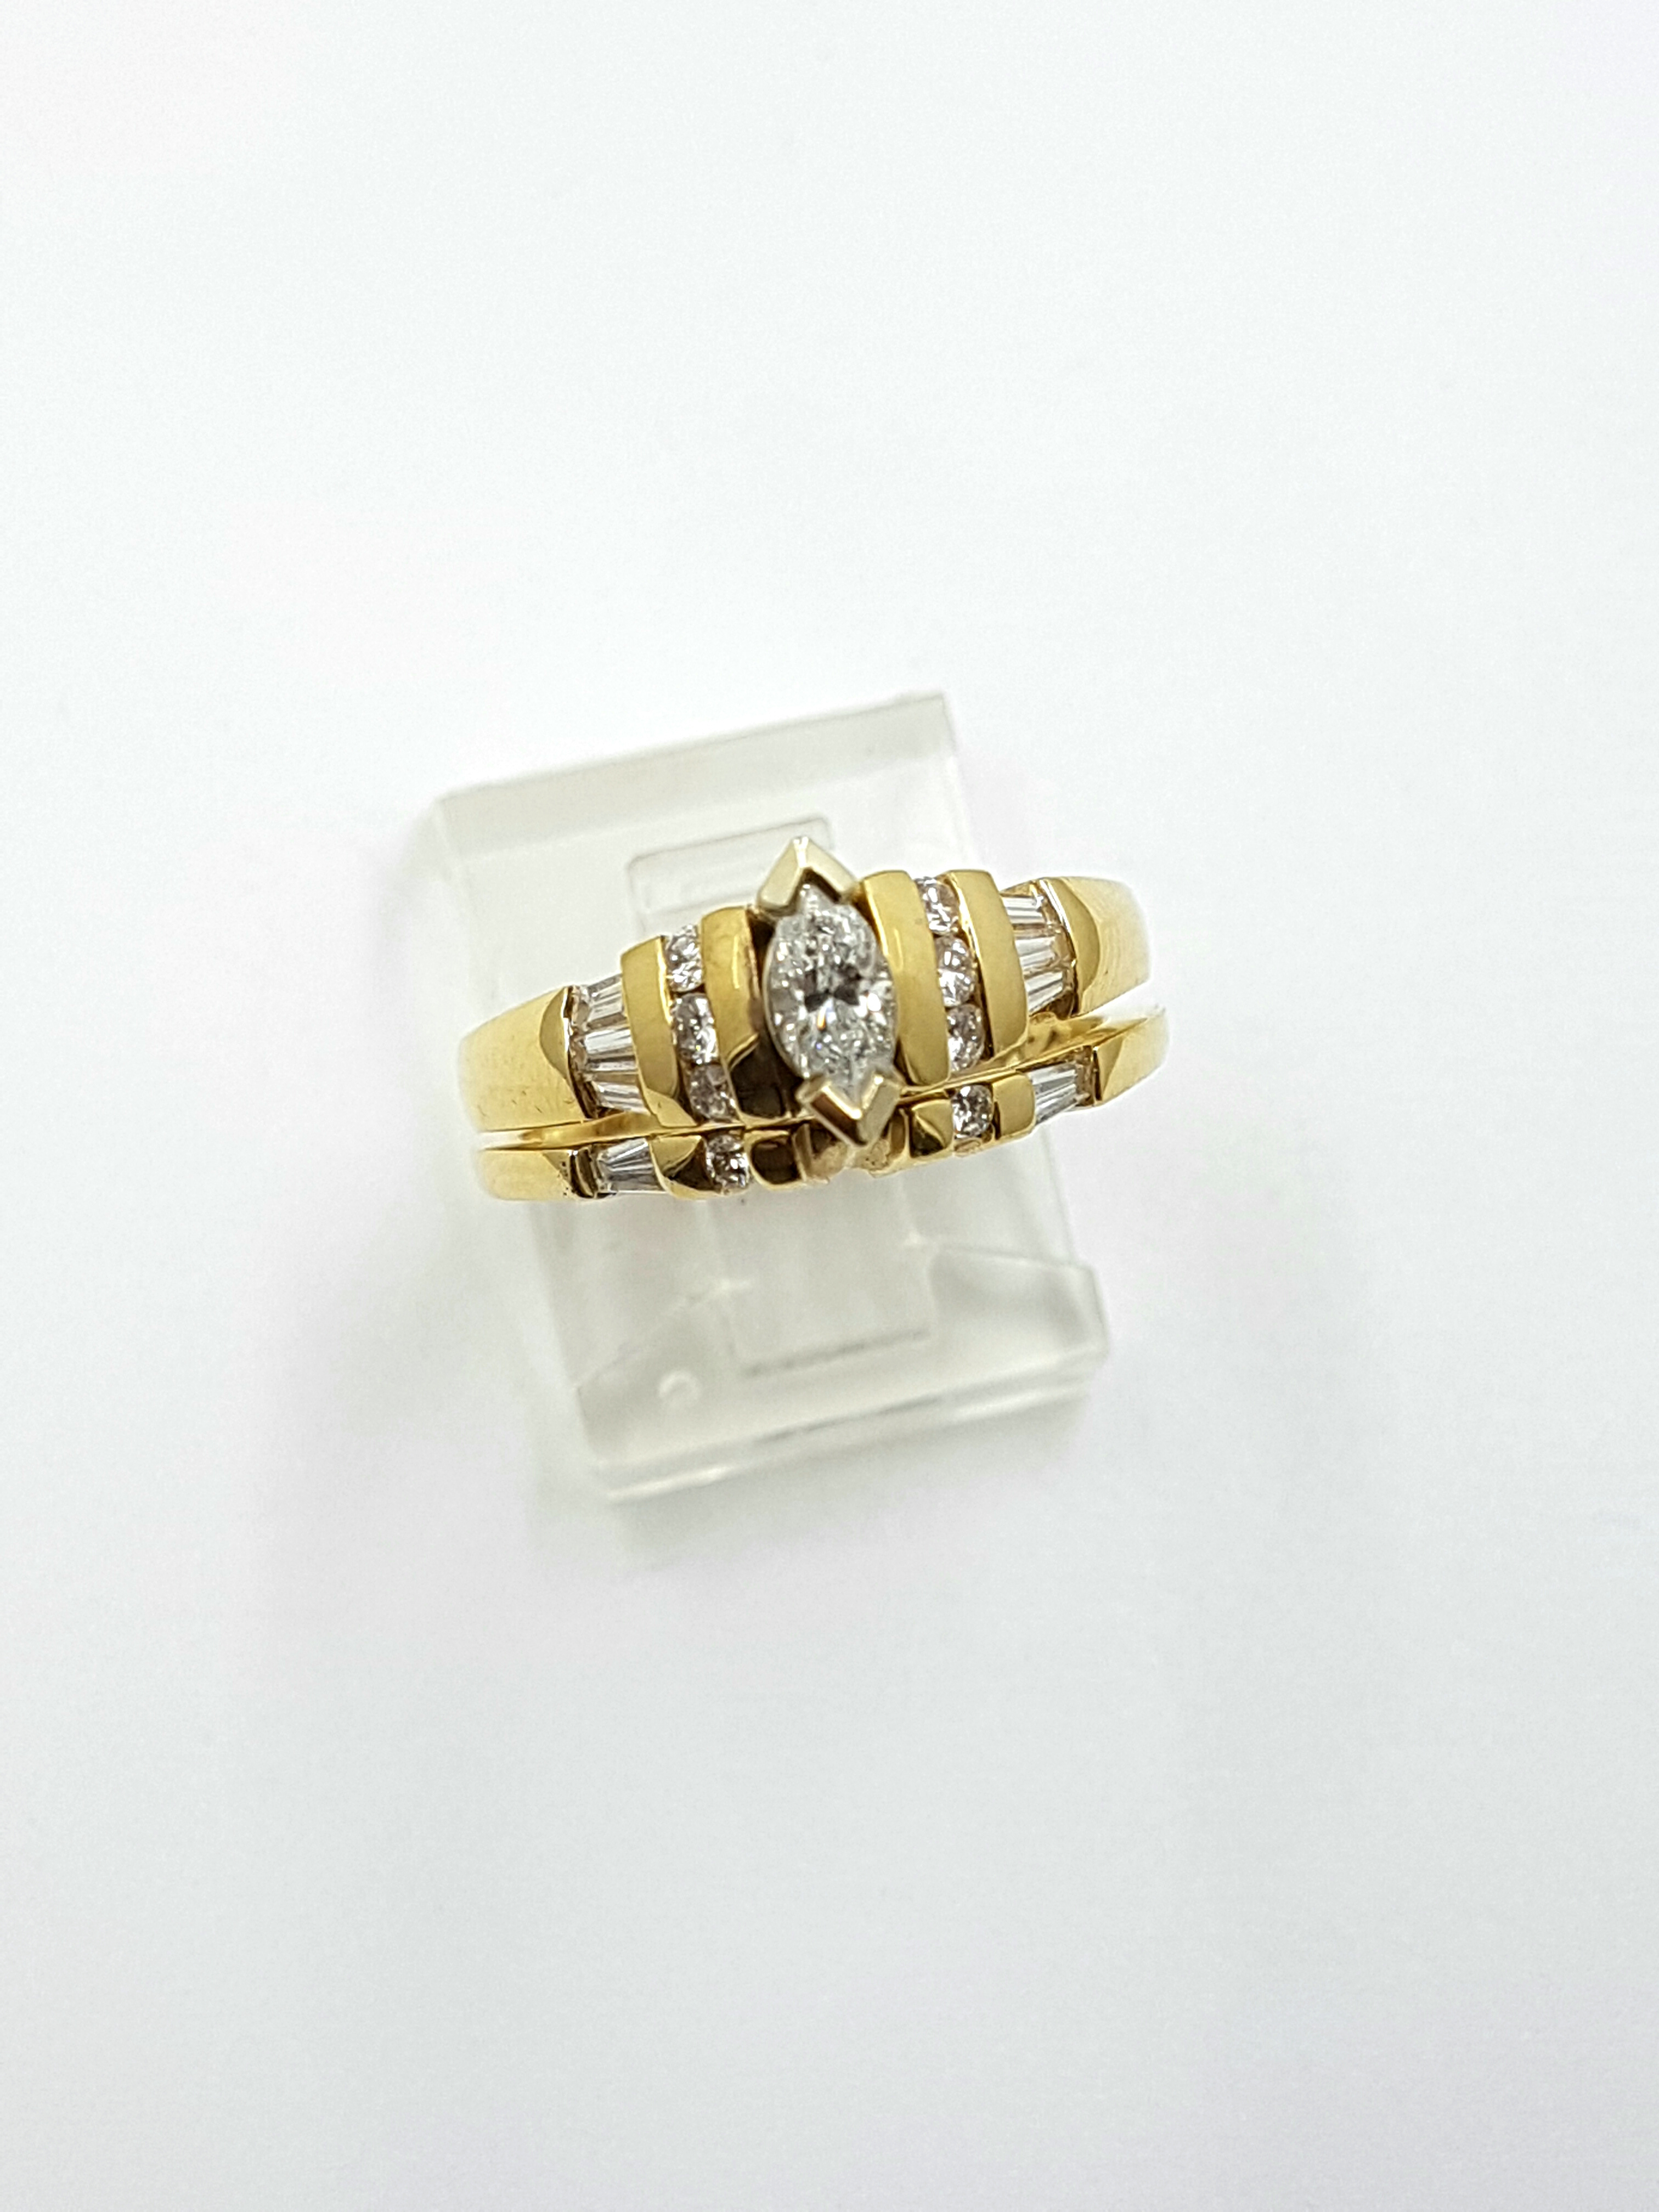 Engagement Ring & Wedding Band
14K Yellow Gold
0.61ct Total
Regular Price $5240
SALE $1295
Ref: DER235+W